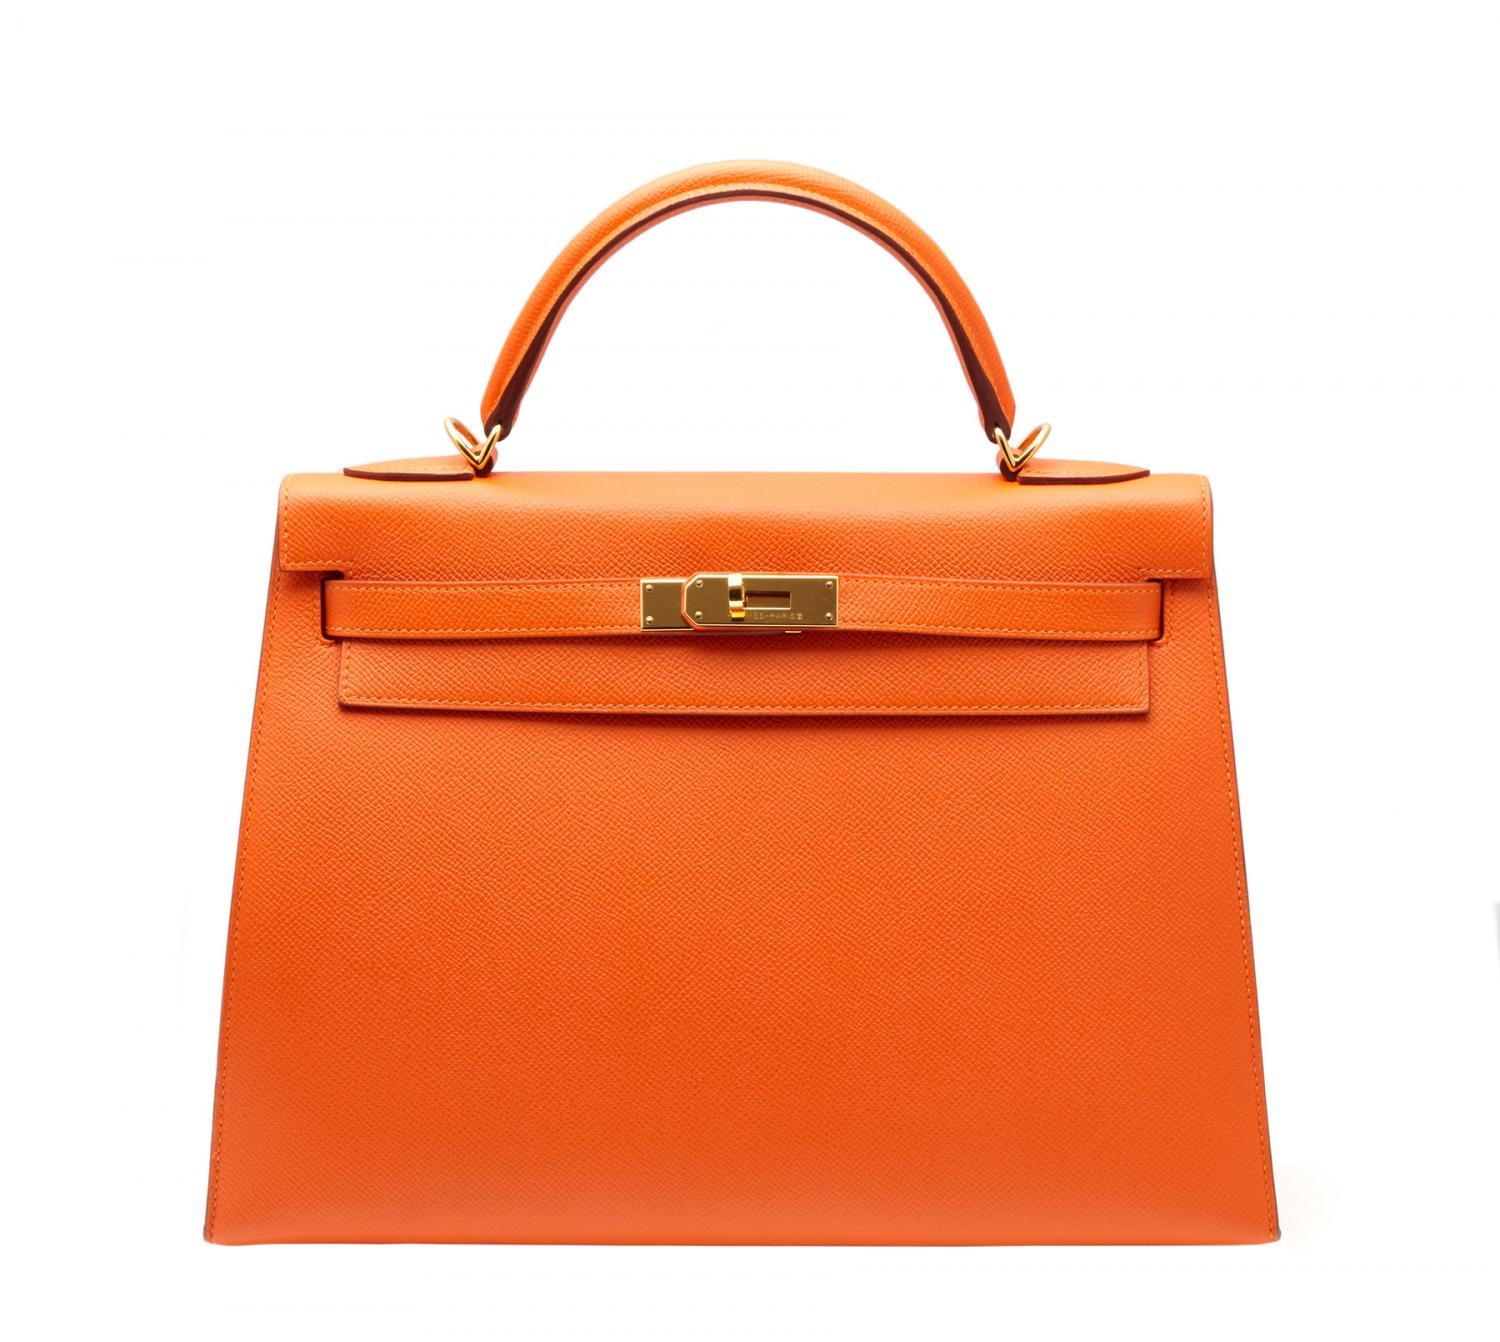 Hermès Kelly Handbag - Price Estimate: $12000 - $15000